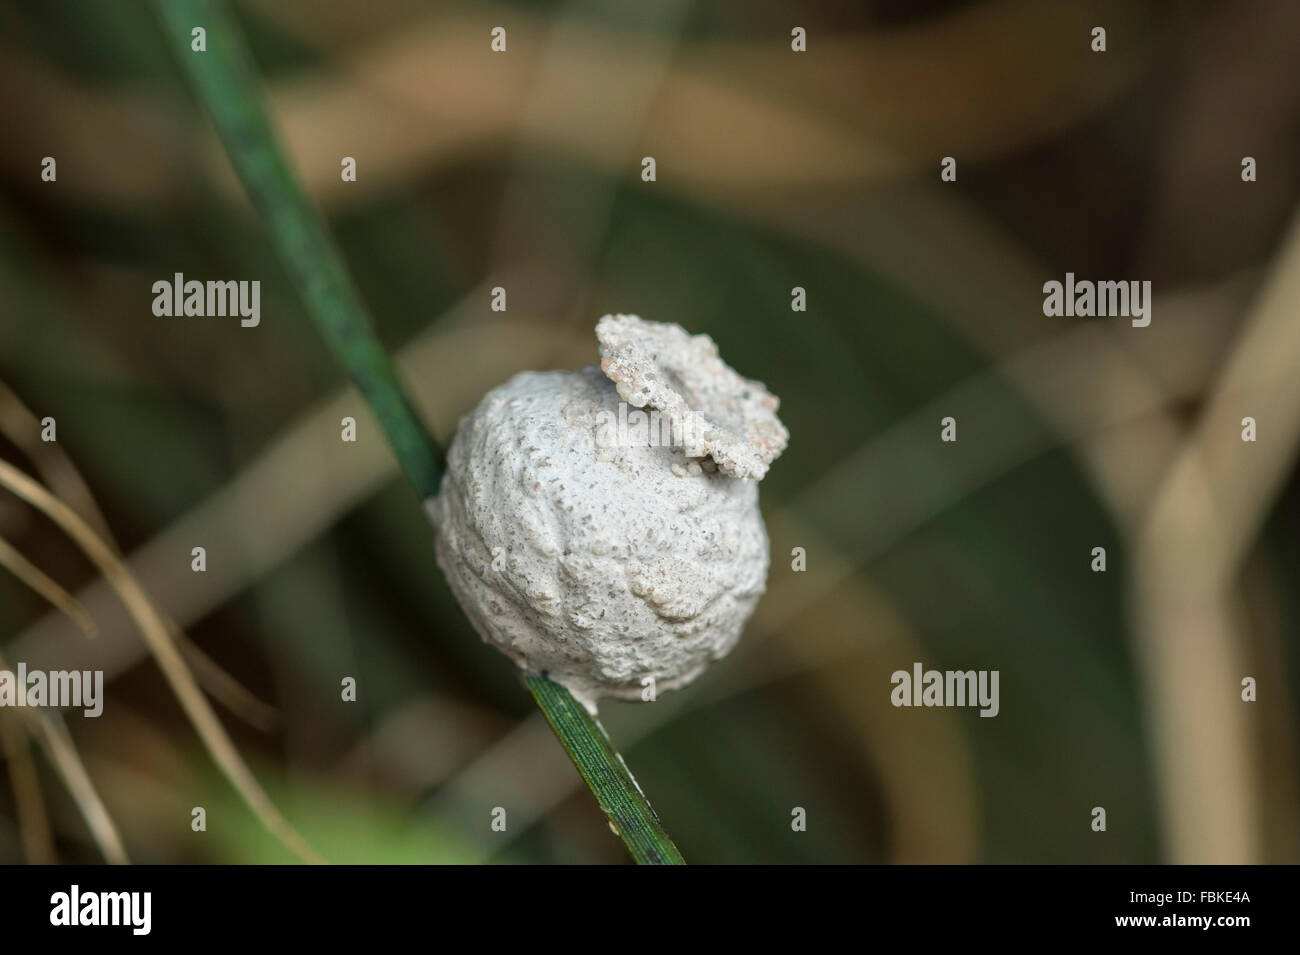 Potter wasp nest, probably Eumenes latreilli, on grass-tree stem Stock Photo